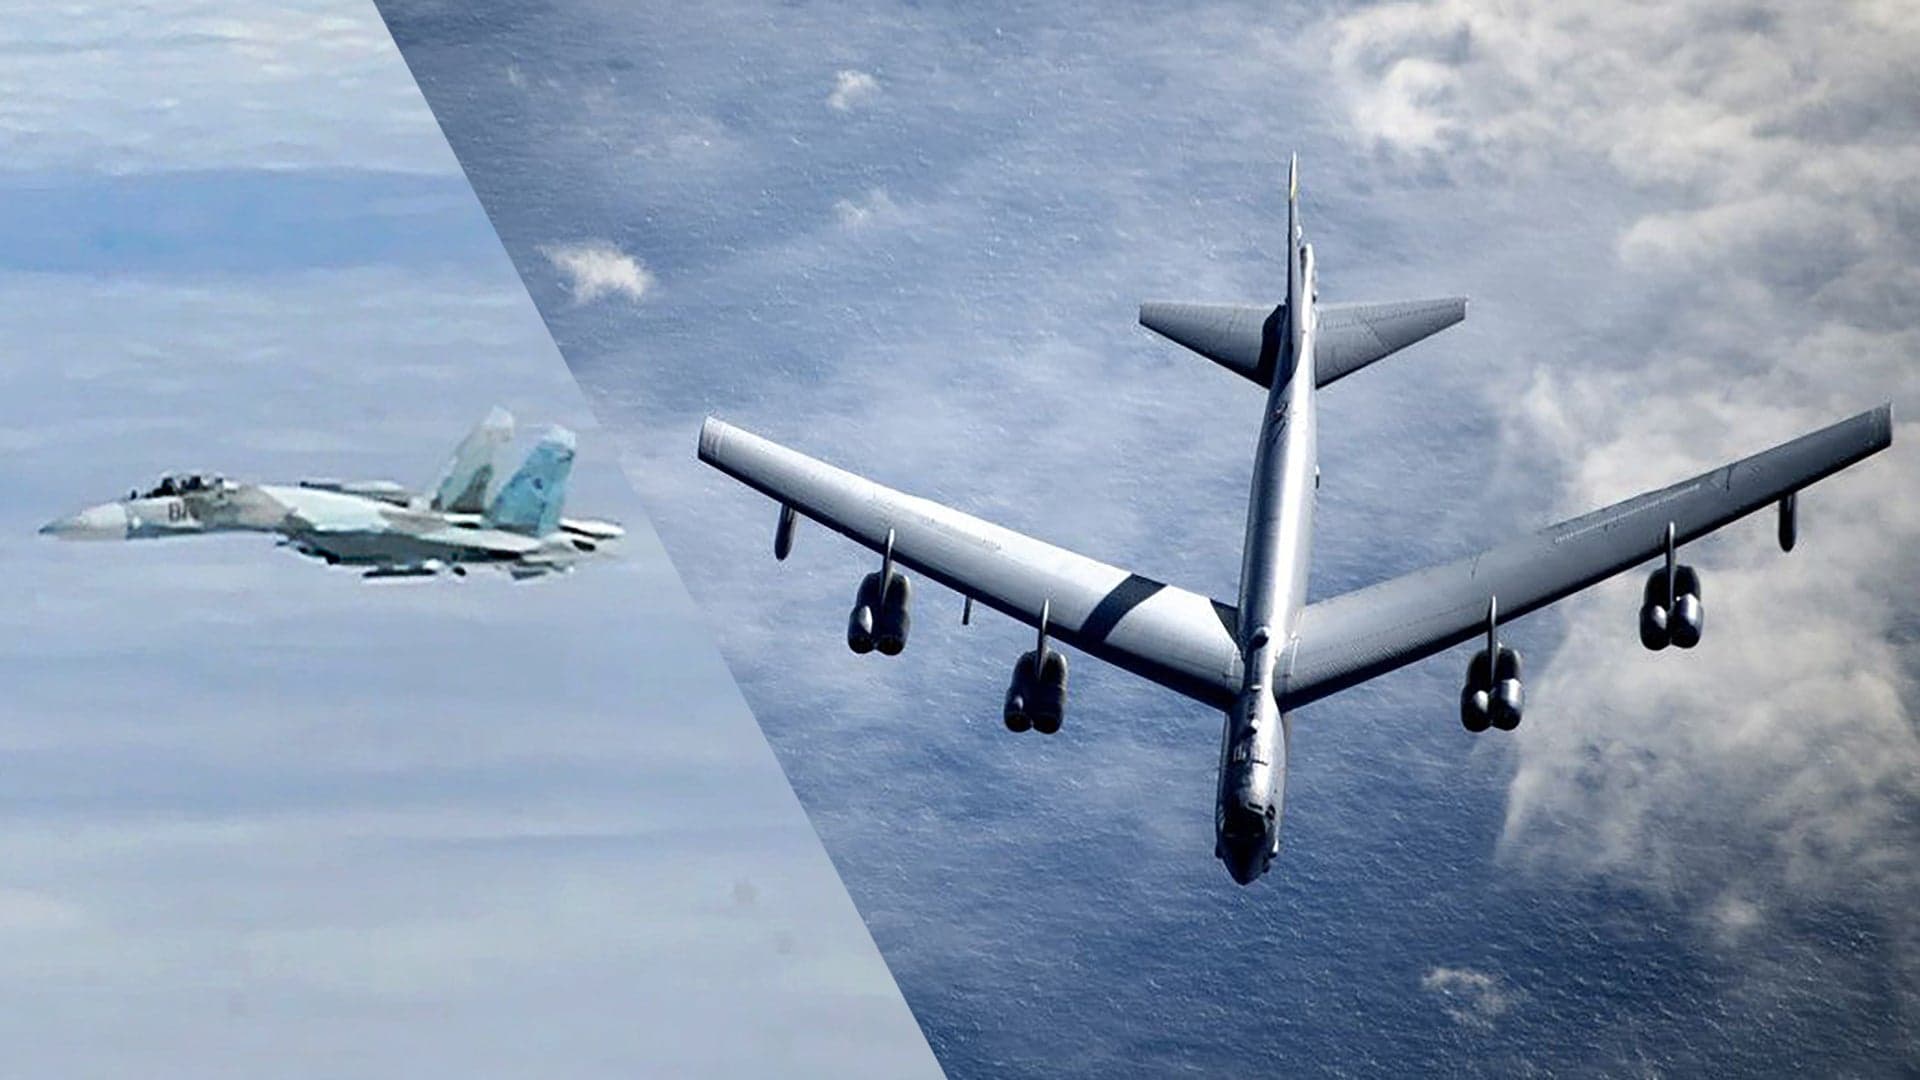 Russian Su-27 Flew Into Danish Territory After Intercepting B-52 Bomber Over The Baltic Sea